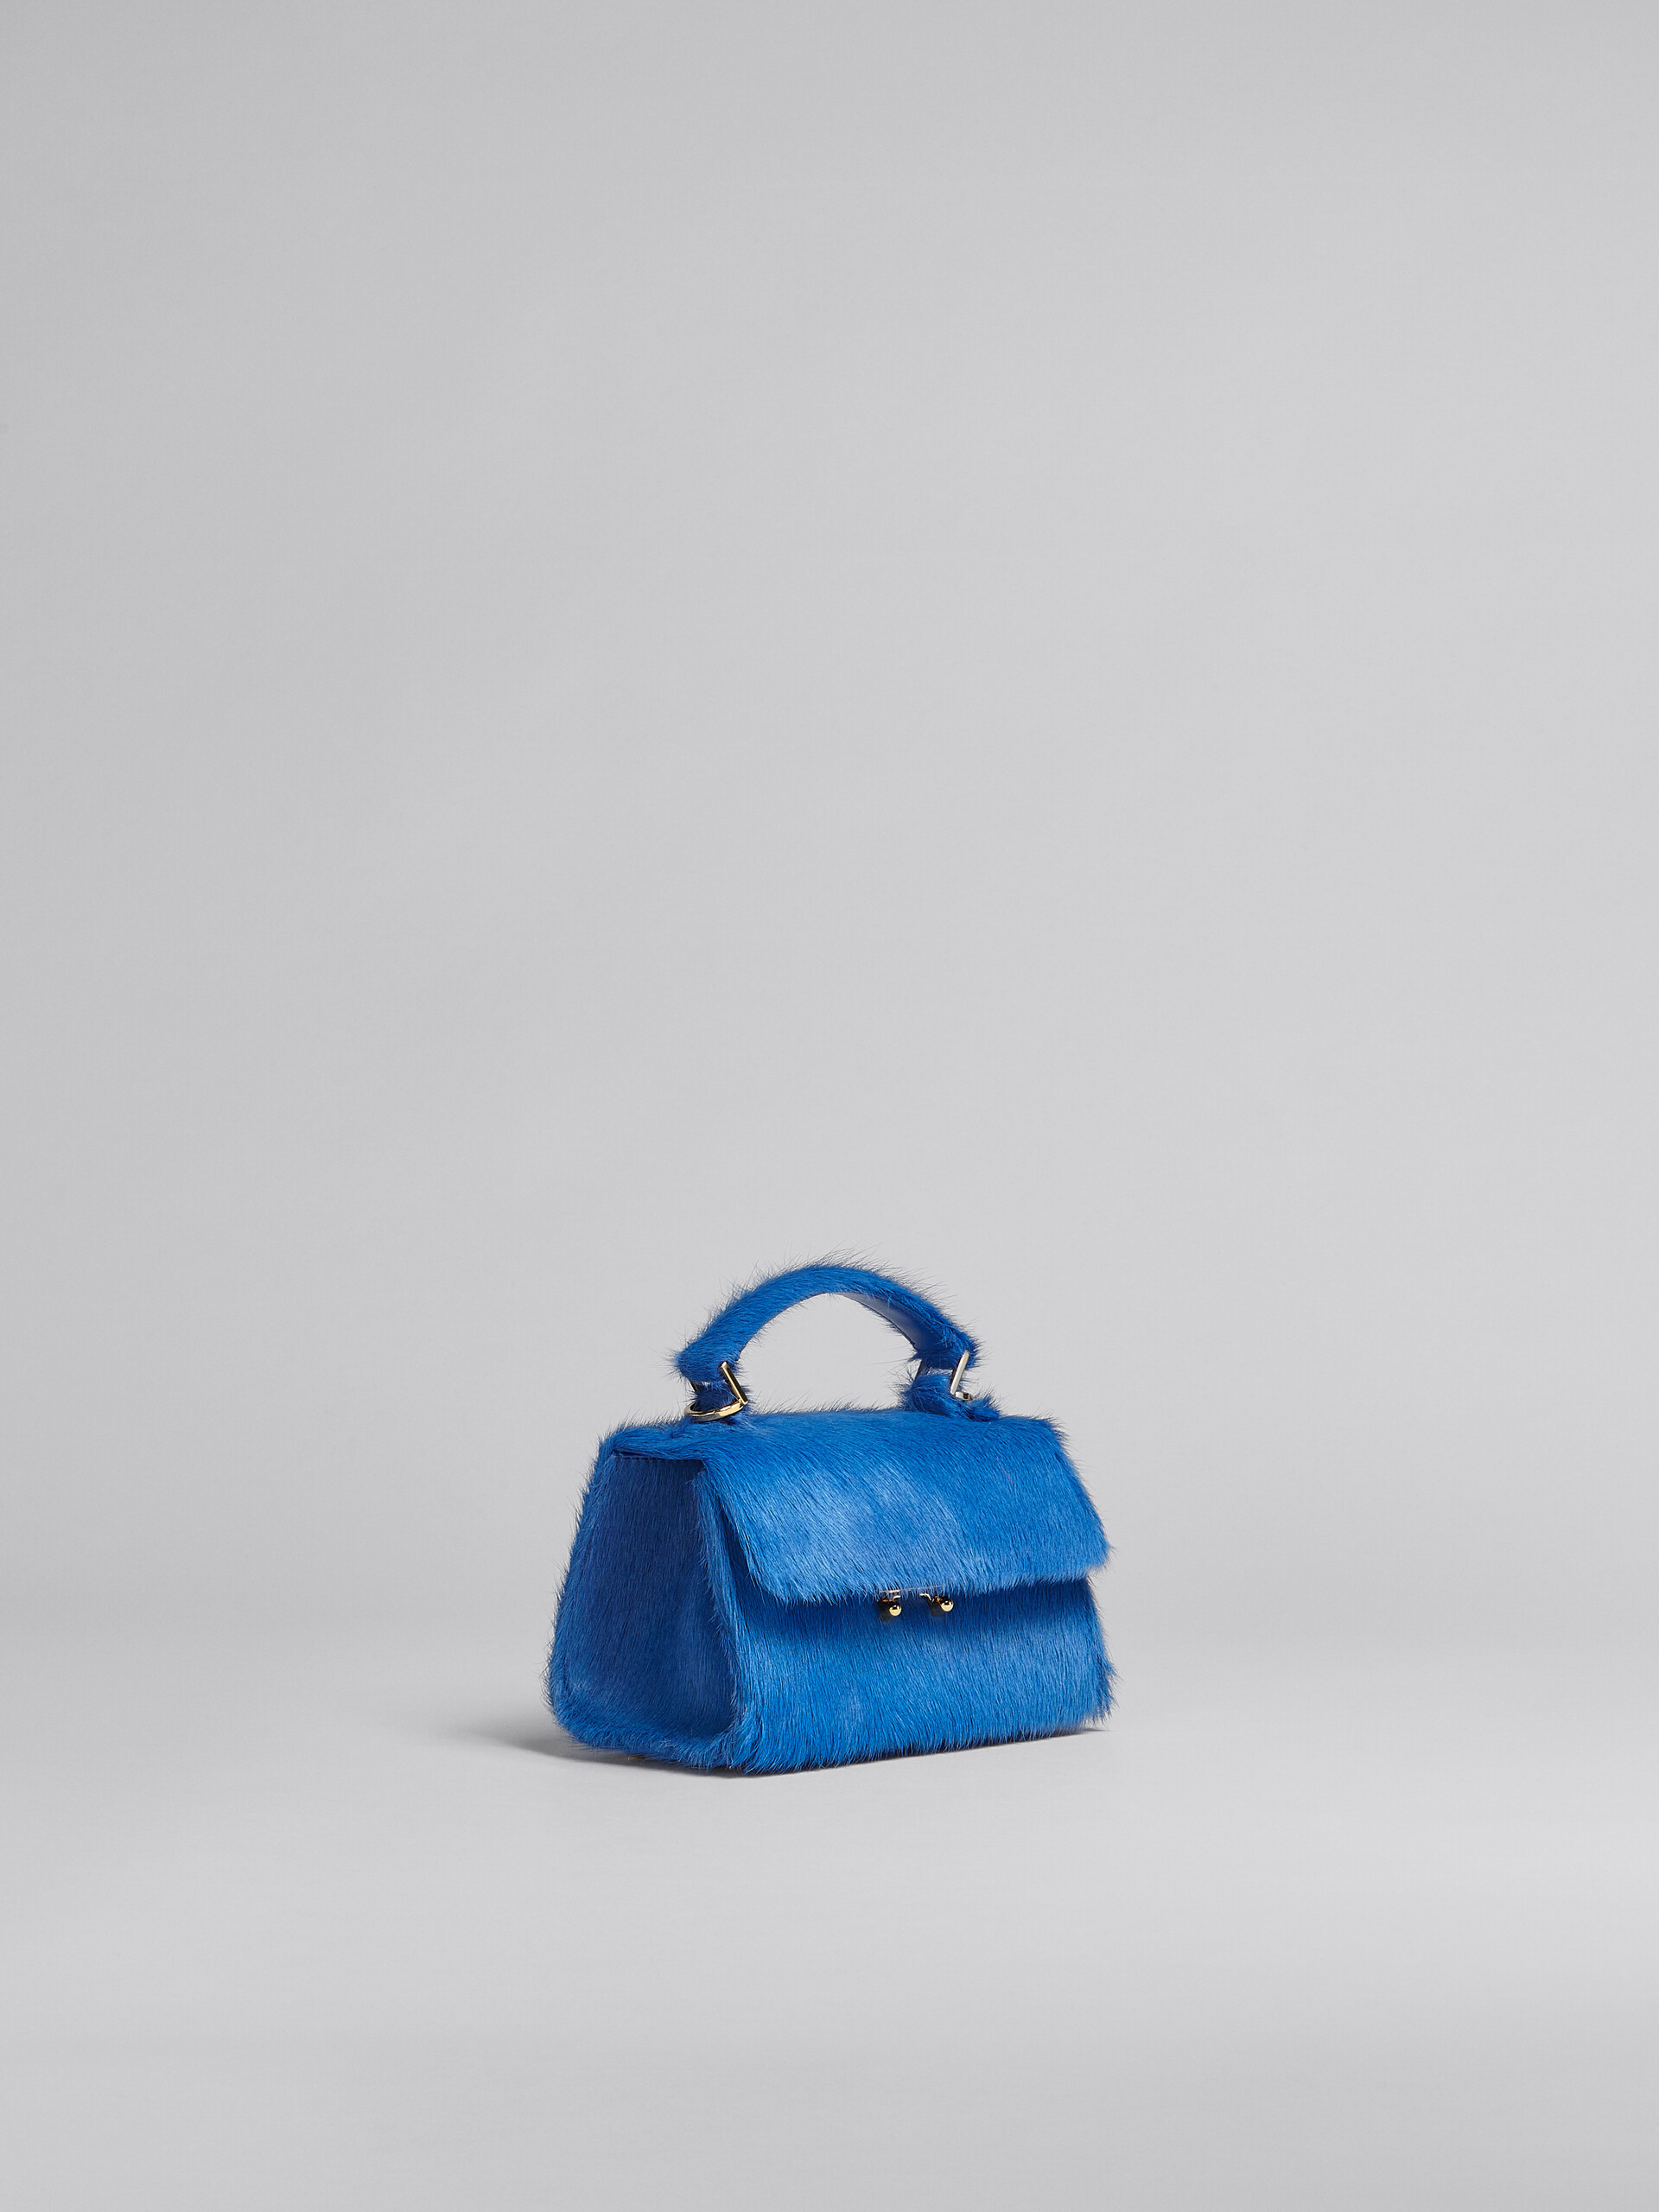 Relativity Mini Bag in blue long hair calfskin - Handbags - Image 6